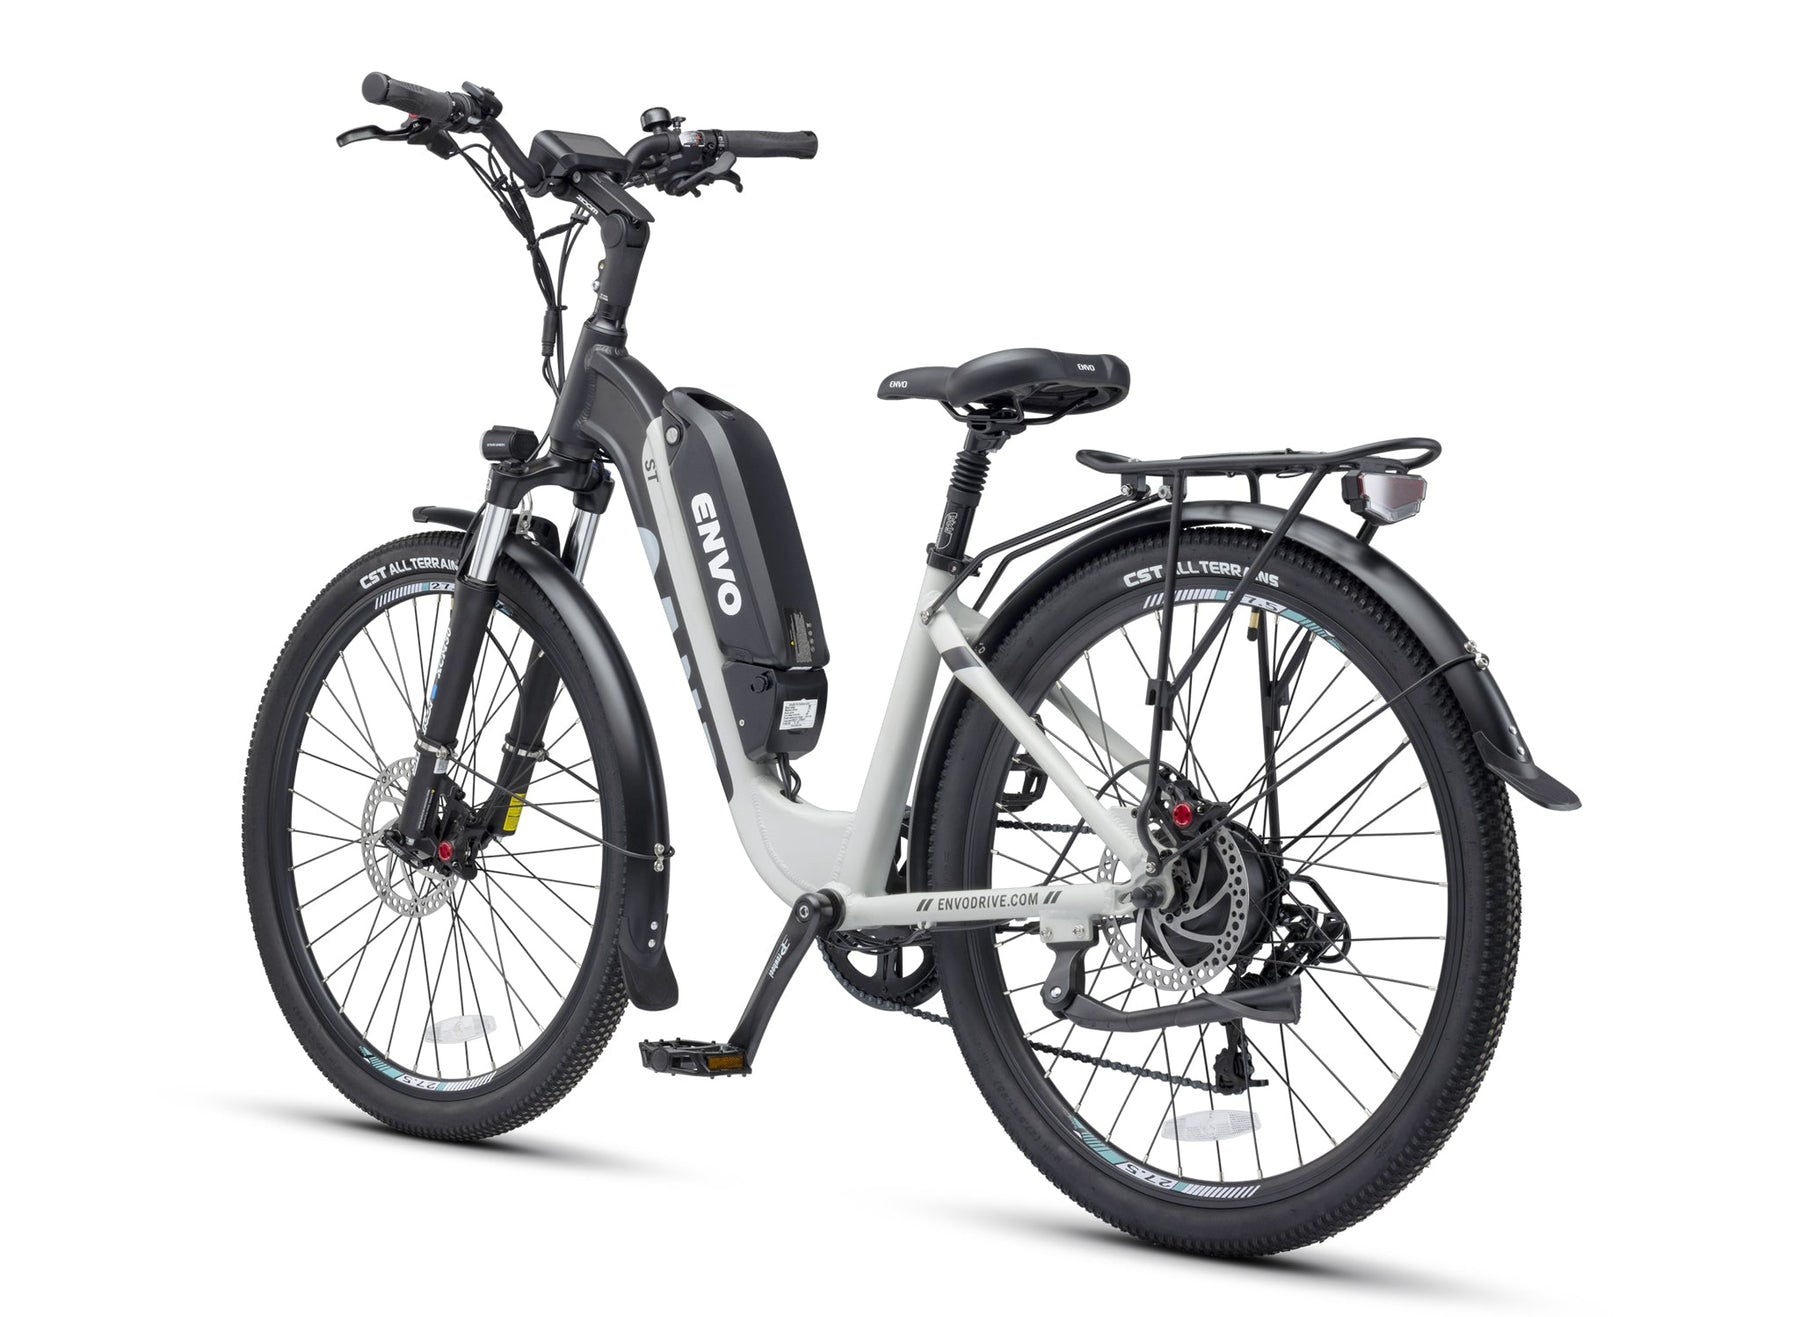 ENVO ST Electric Bike Promo